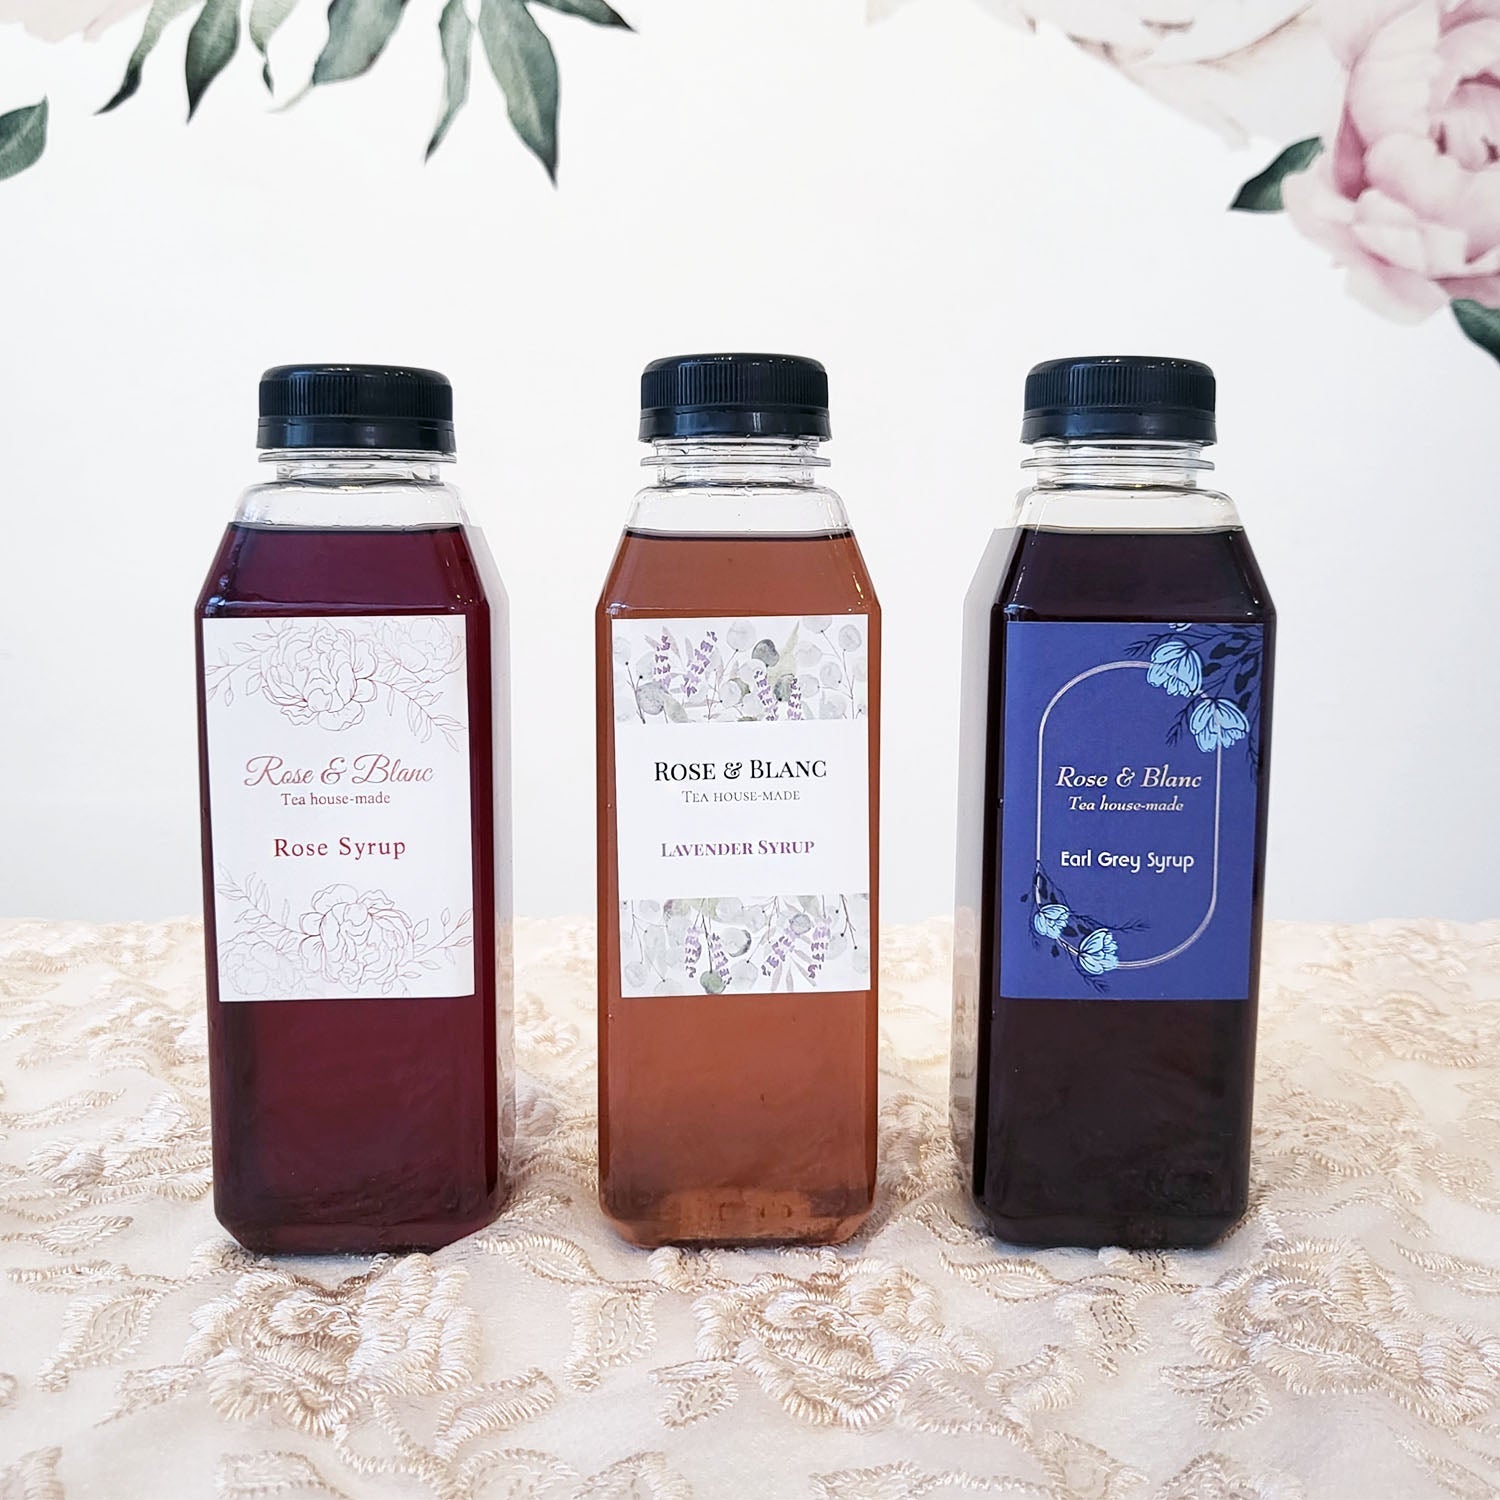 Tea-house Made Rose Syrup 16 oz